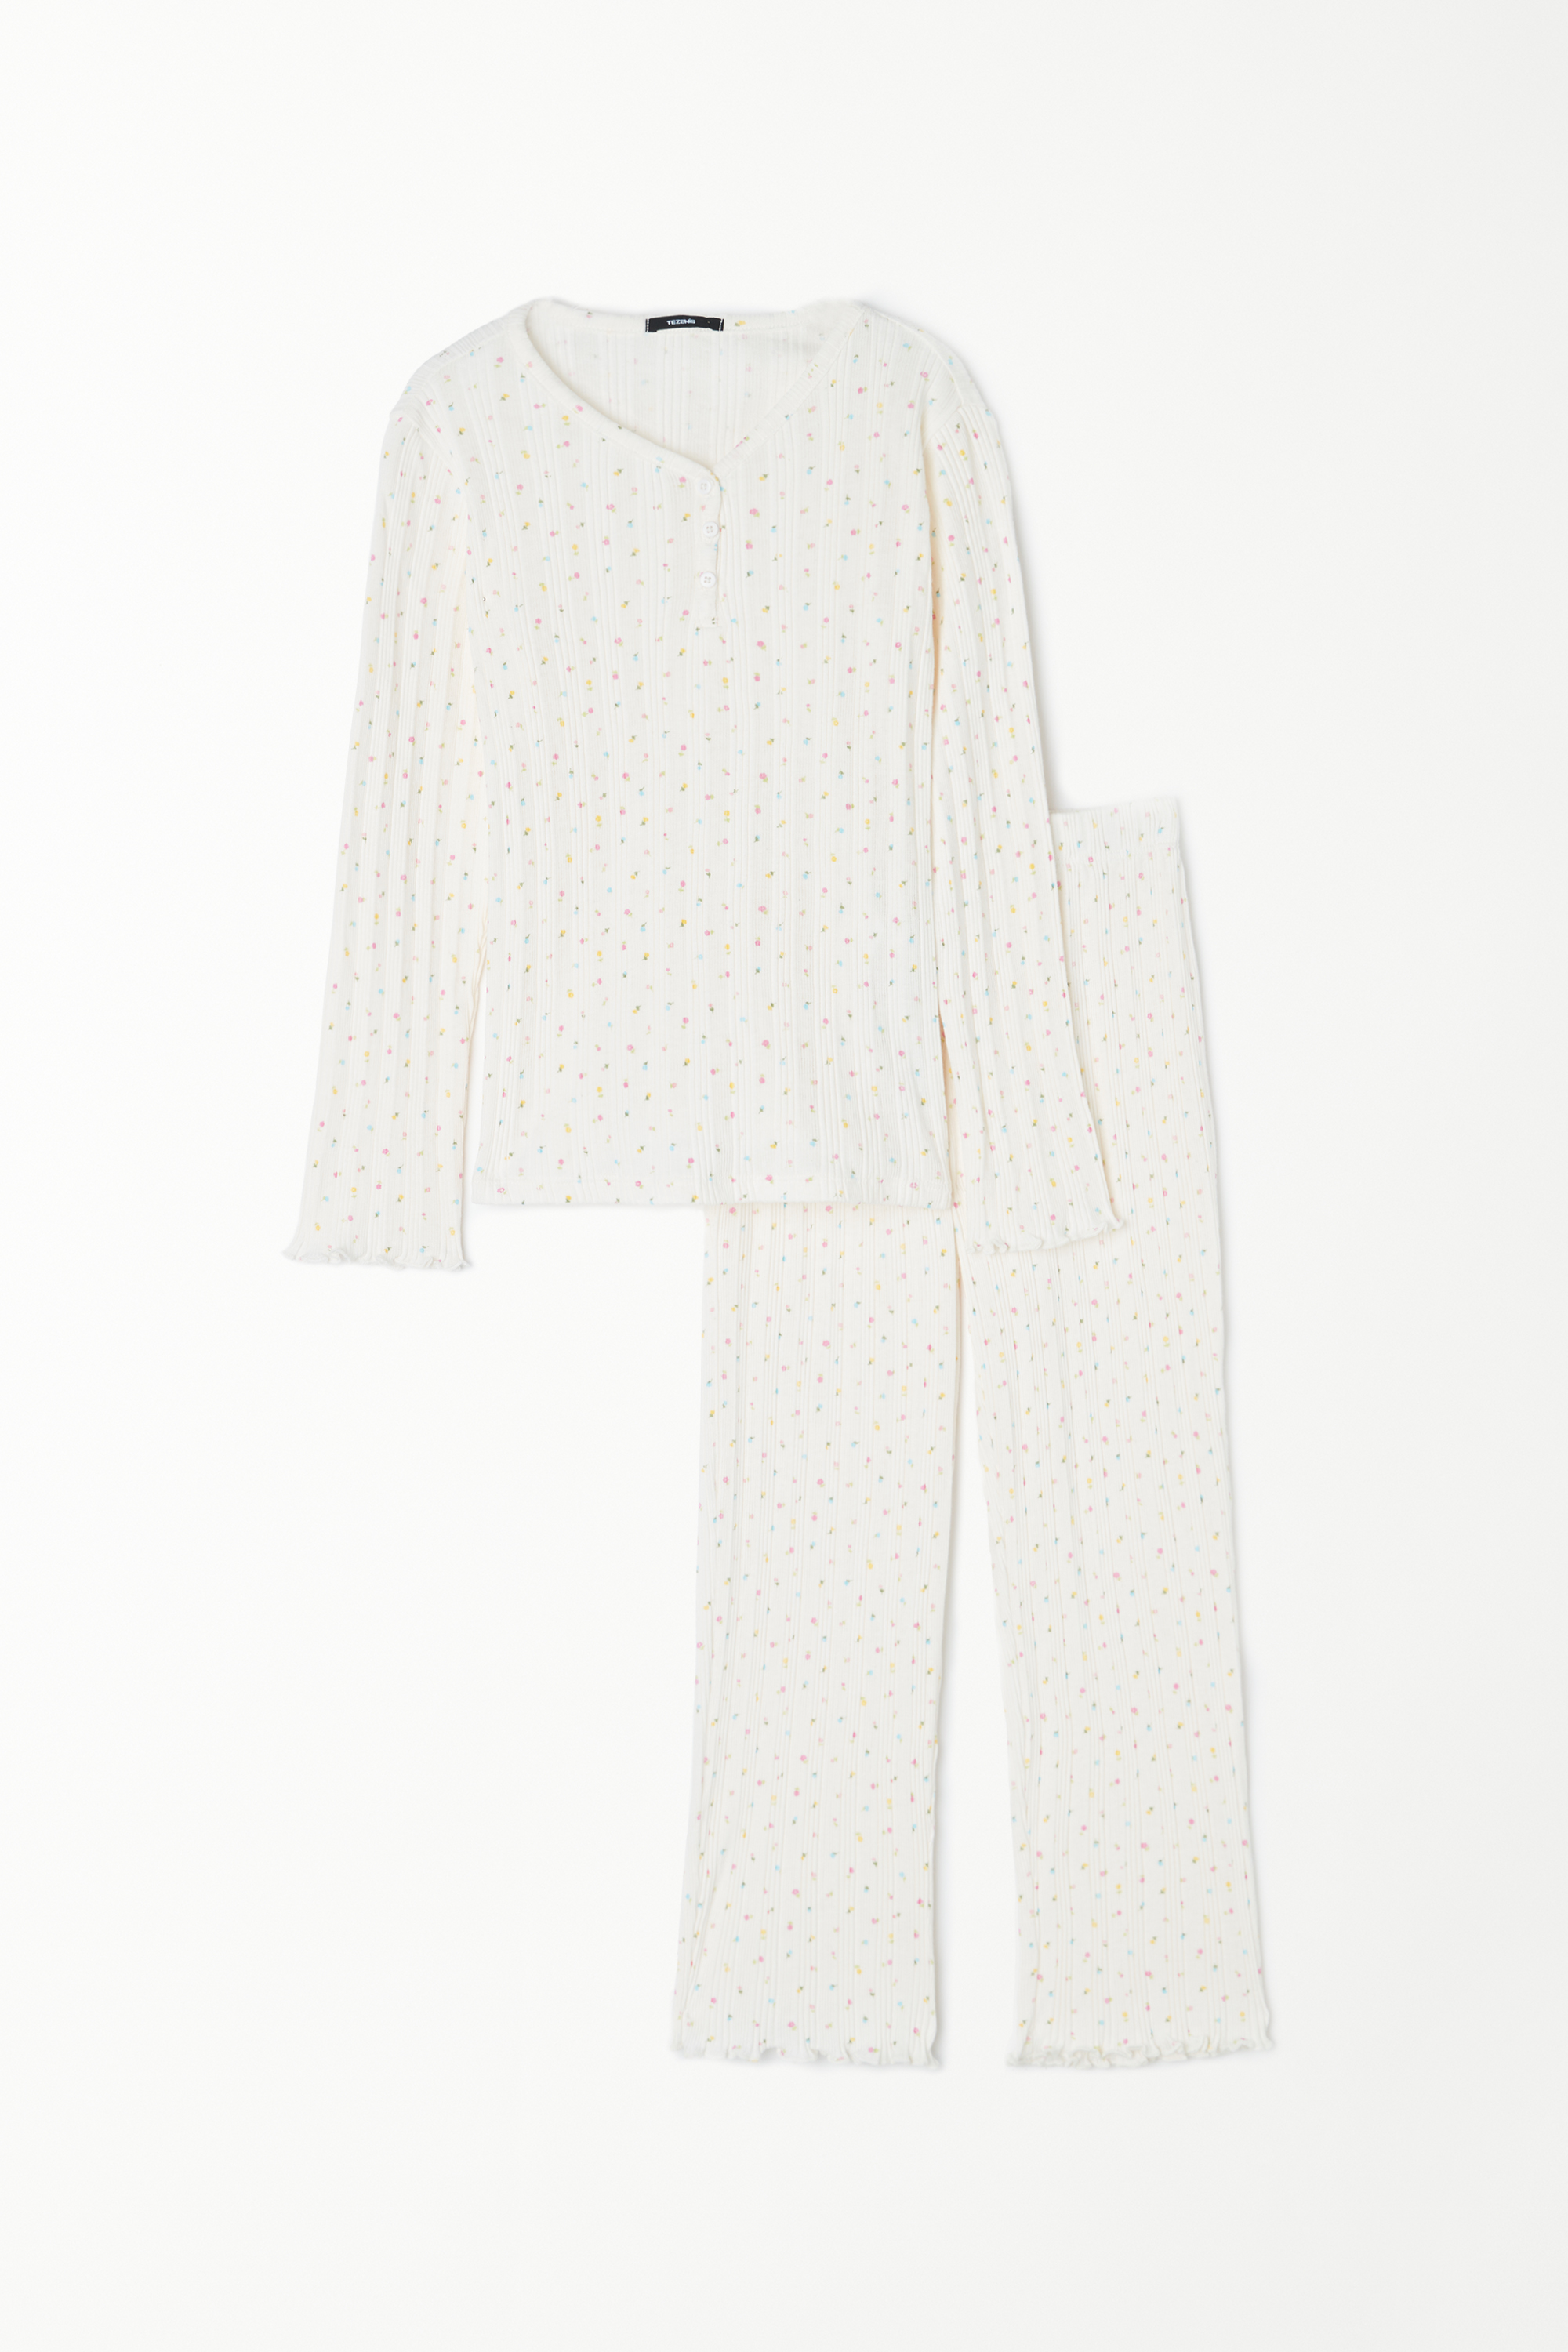 Girls’ Long Ribbed Cotton Pyjamas with Small Flower Print